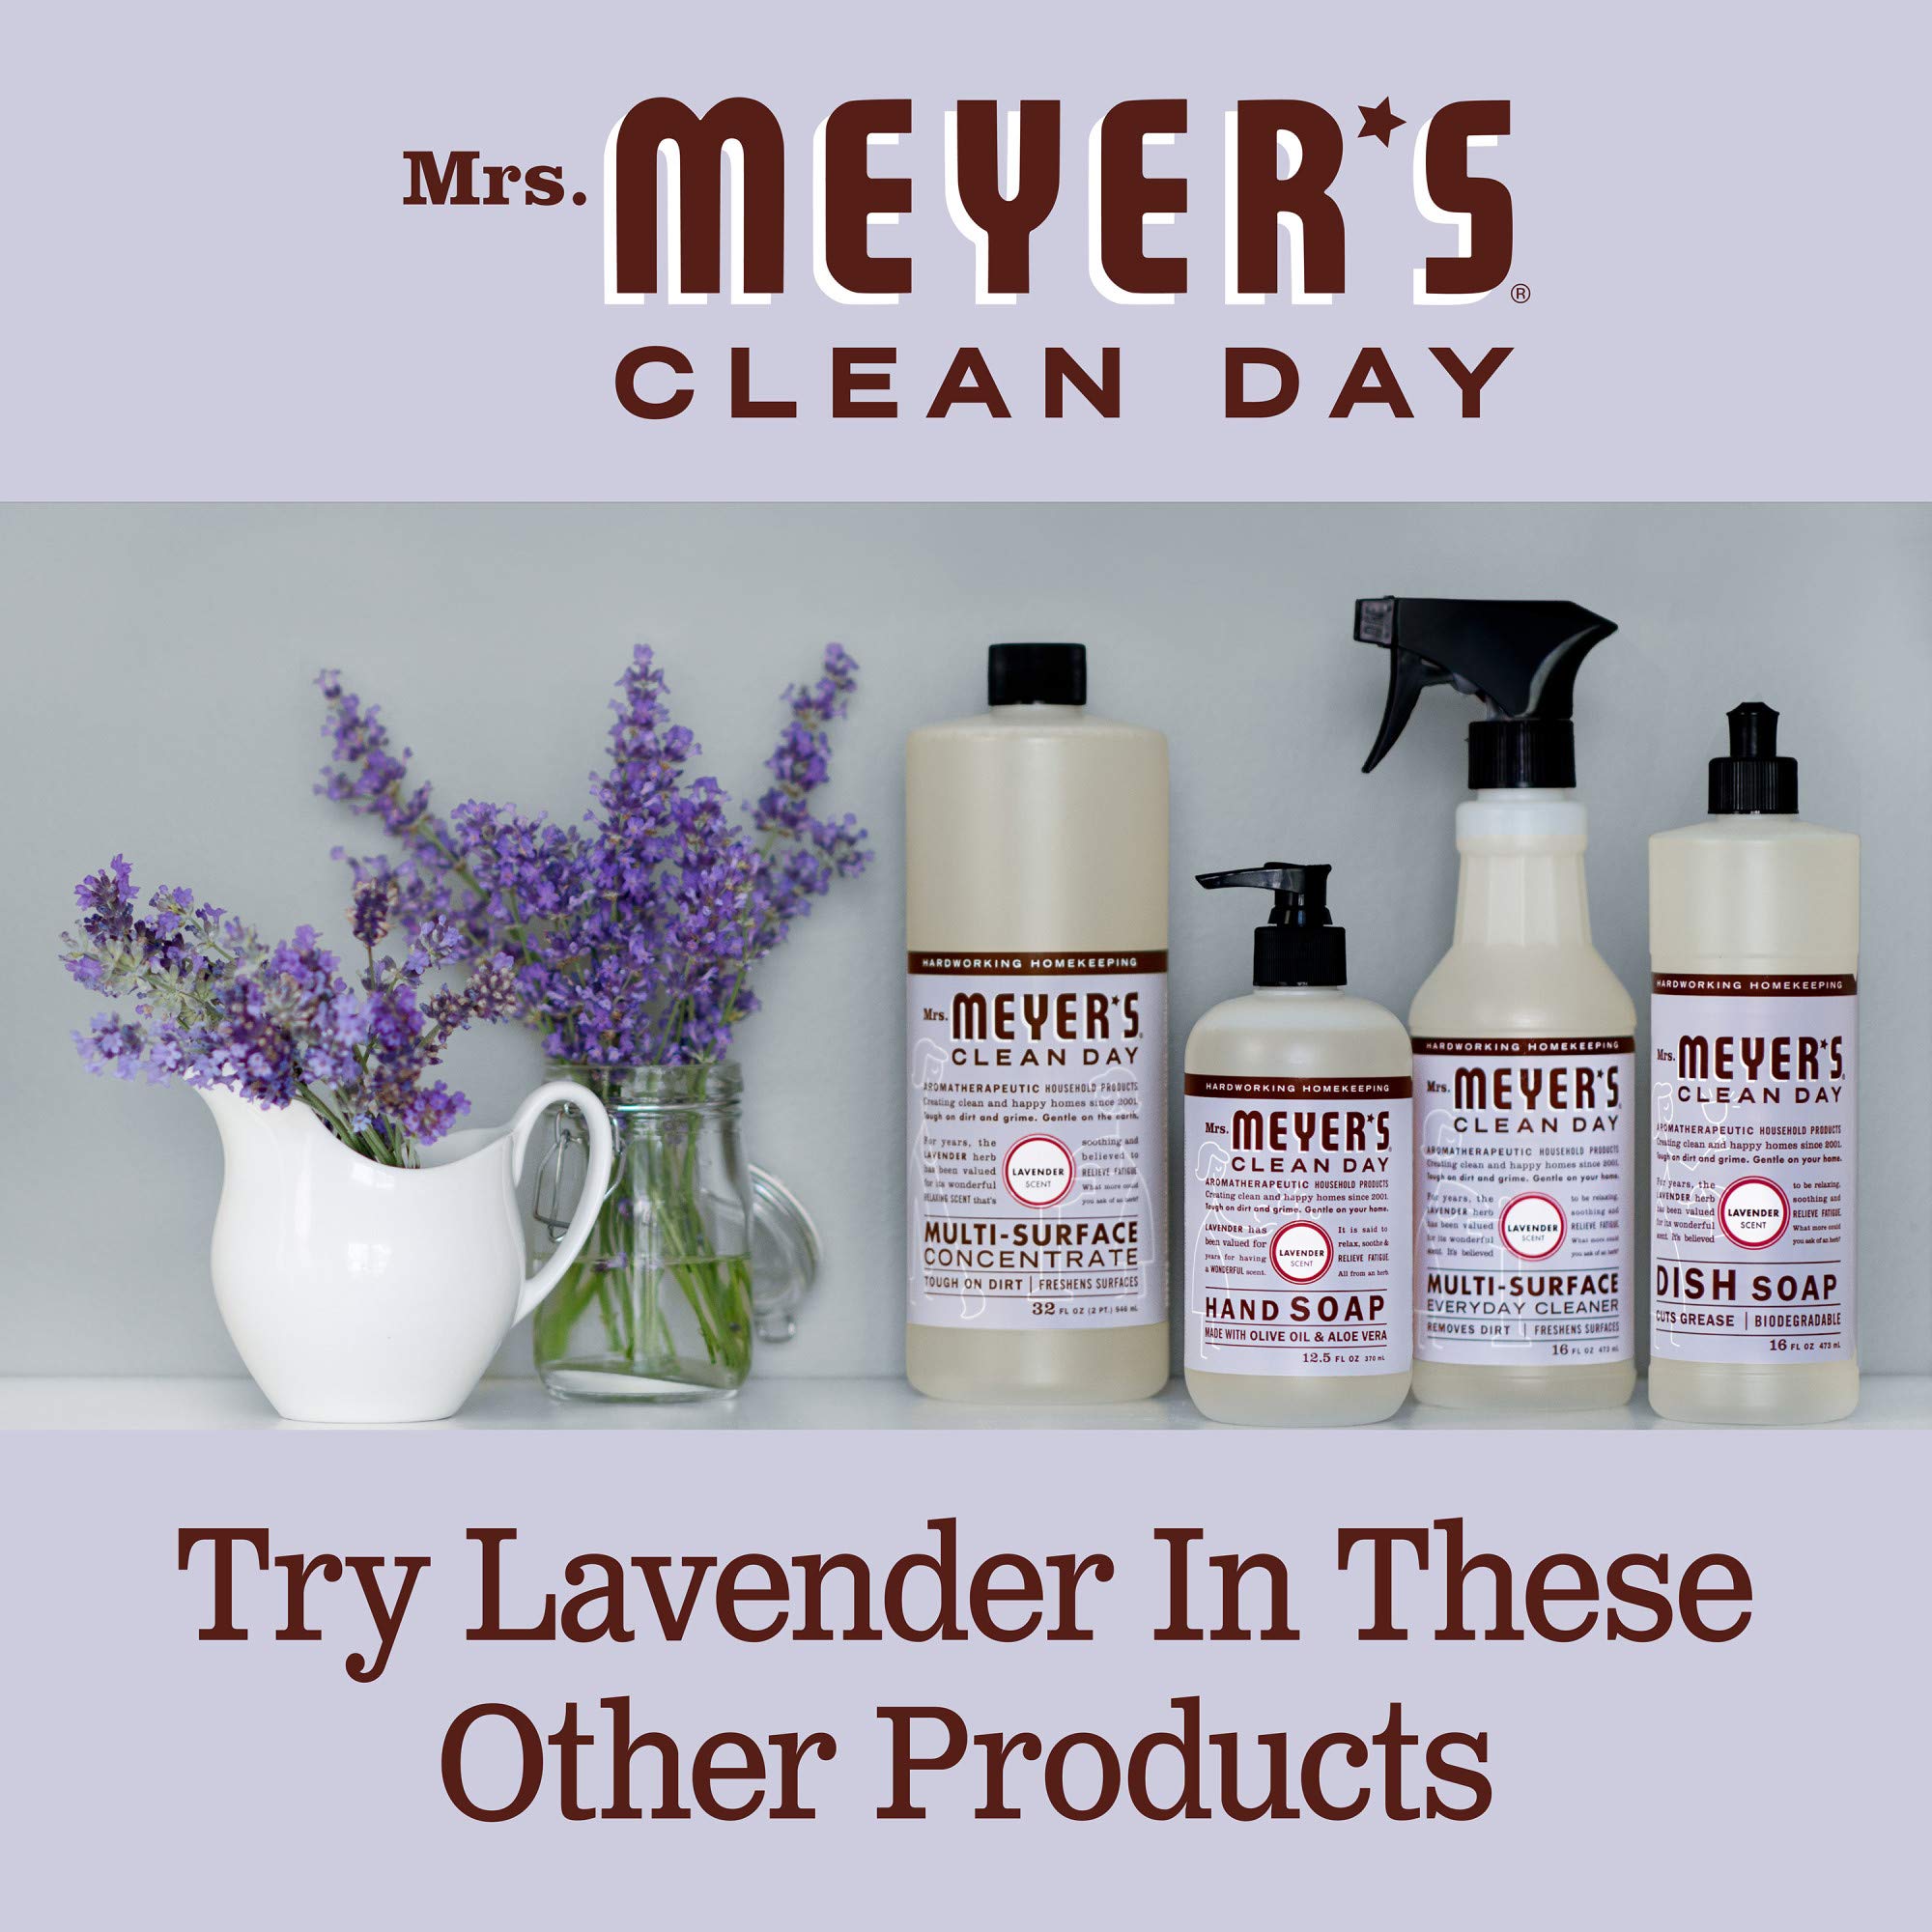 Mrs. Meyer's Moisturizing Body Wash for Women and Men, Biodegradable Shower Gel Formula Made with Essential Oils, Lavender, 16 oz